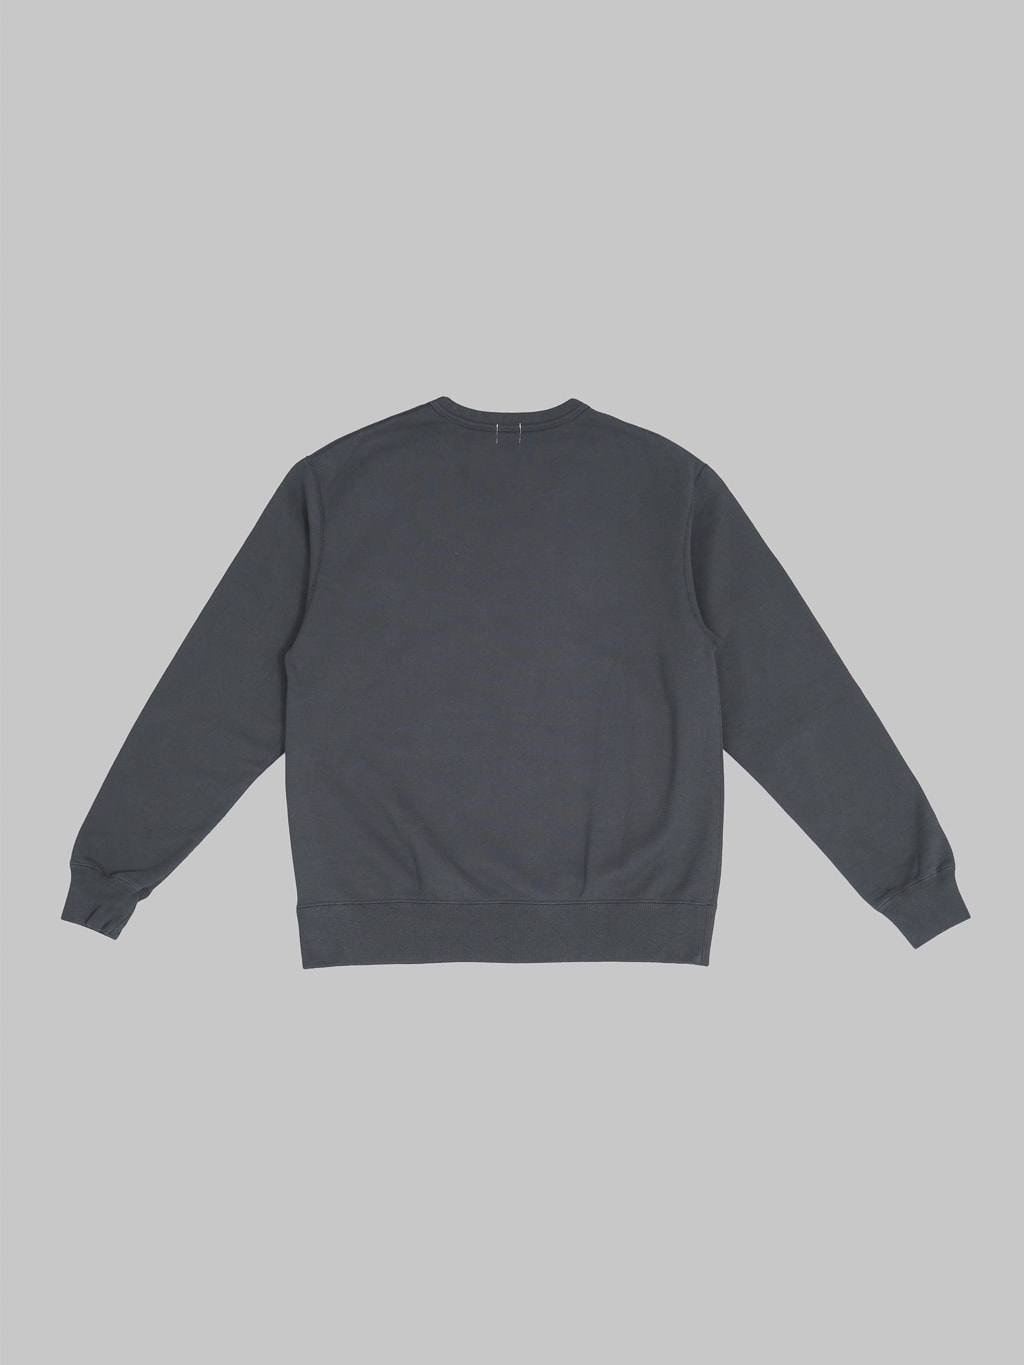 Loop Weft Vintage Pinborder Knit Crewneck Sweatshirt Antique Black back